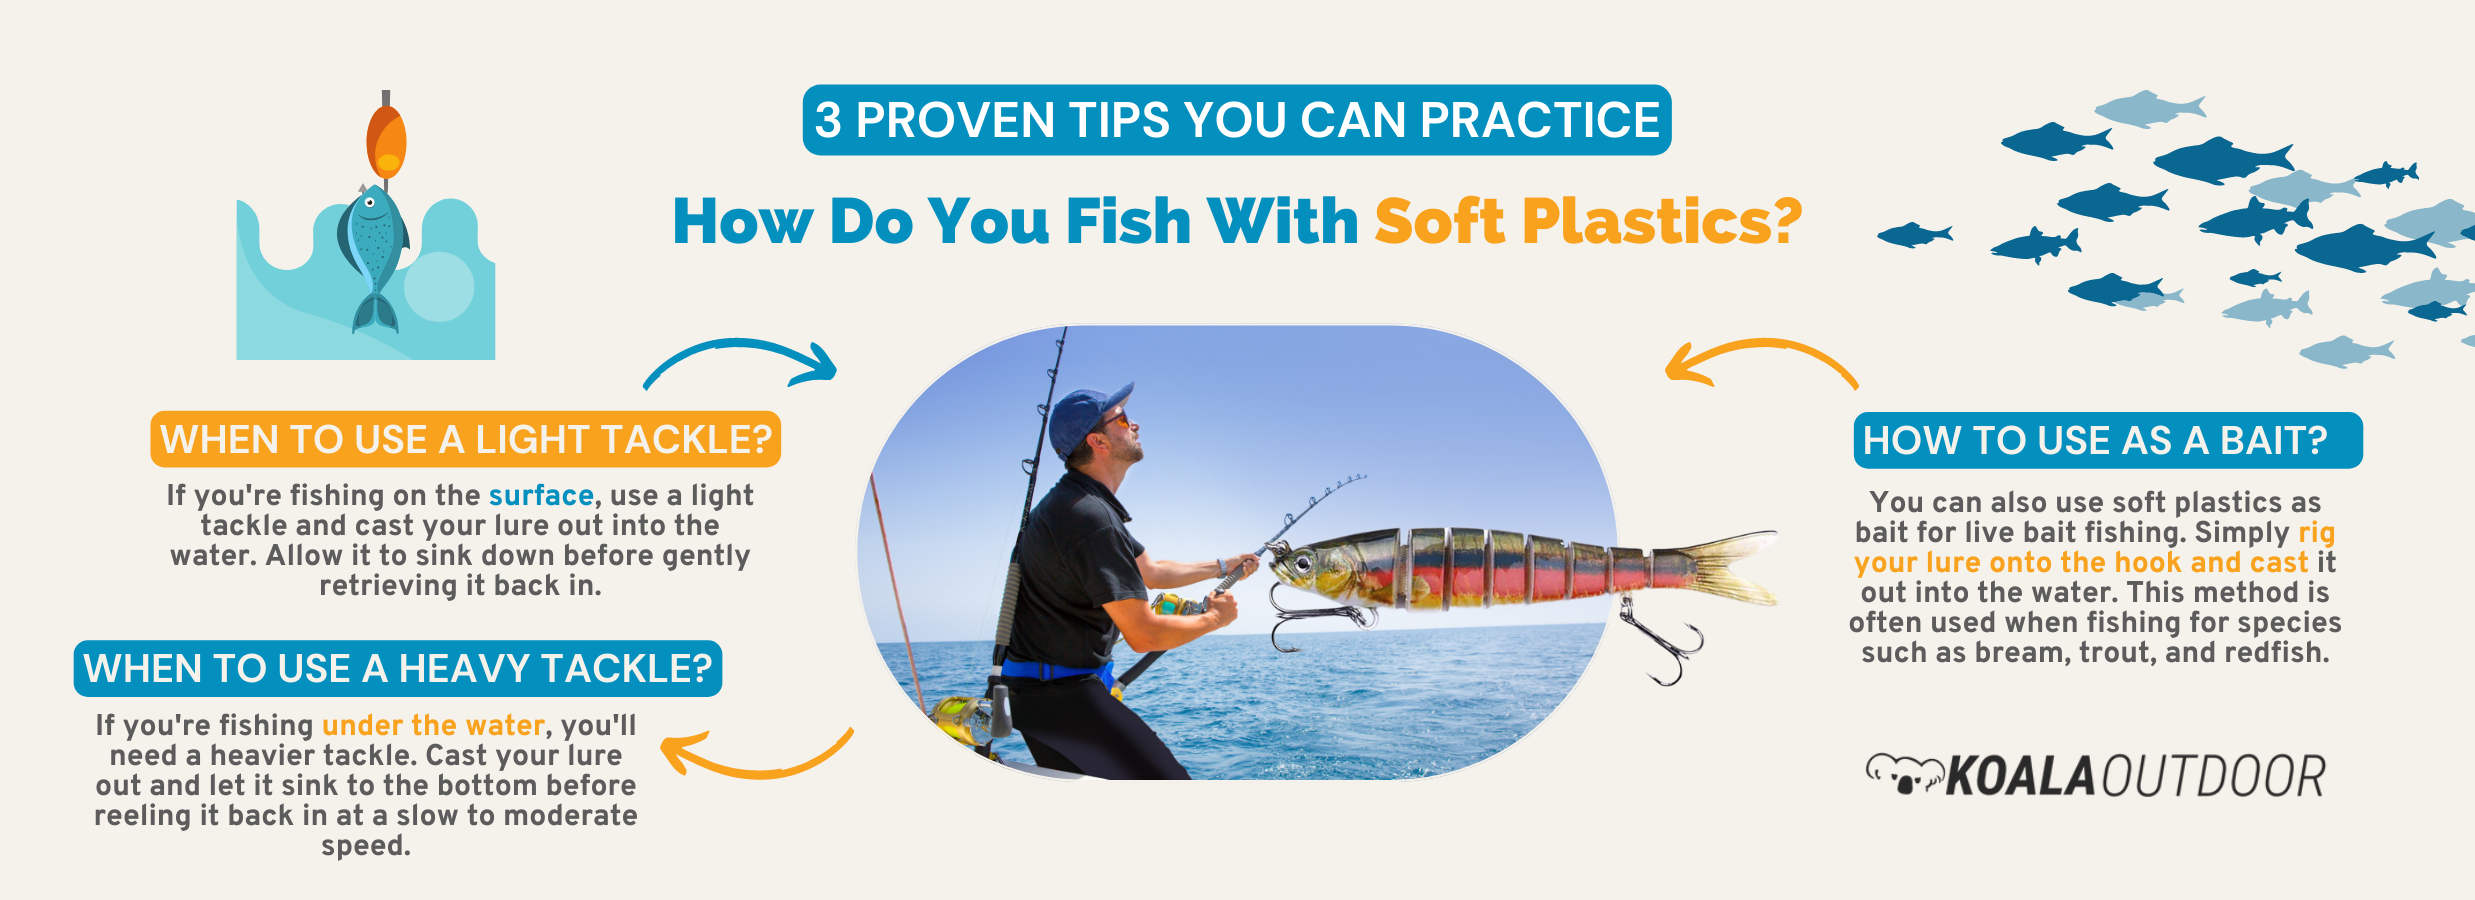 Fishing Soft Plastics - Learning How To Fish